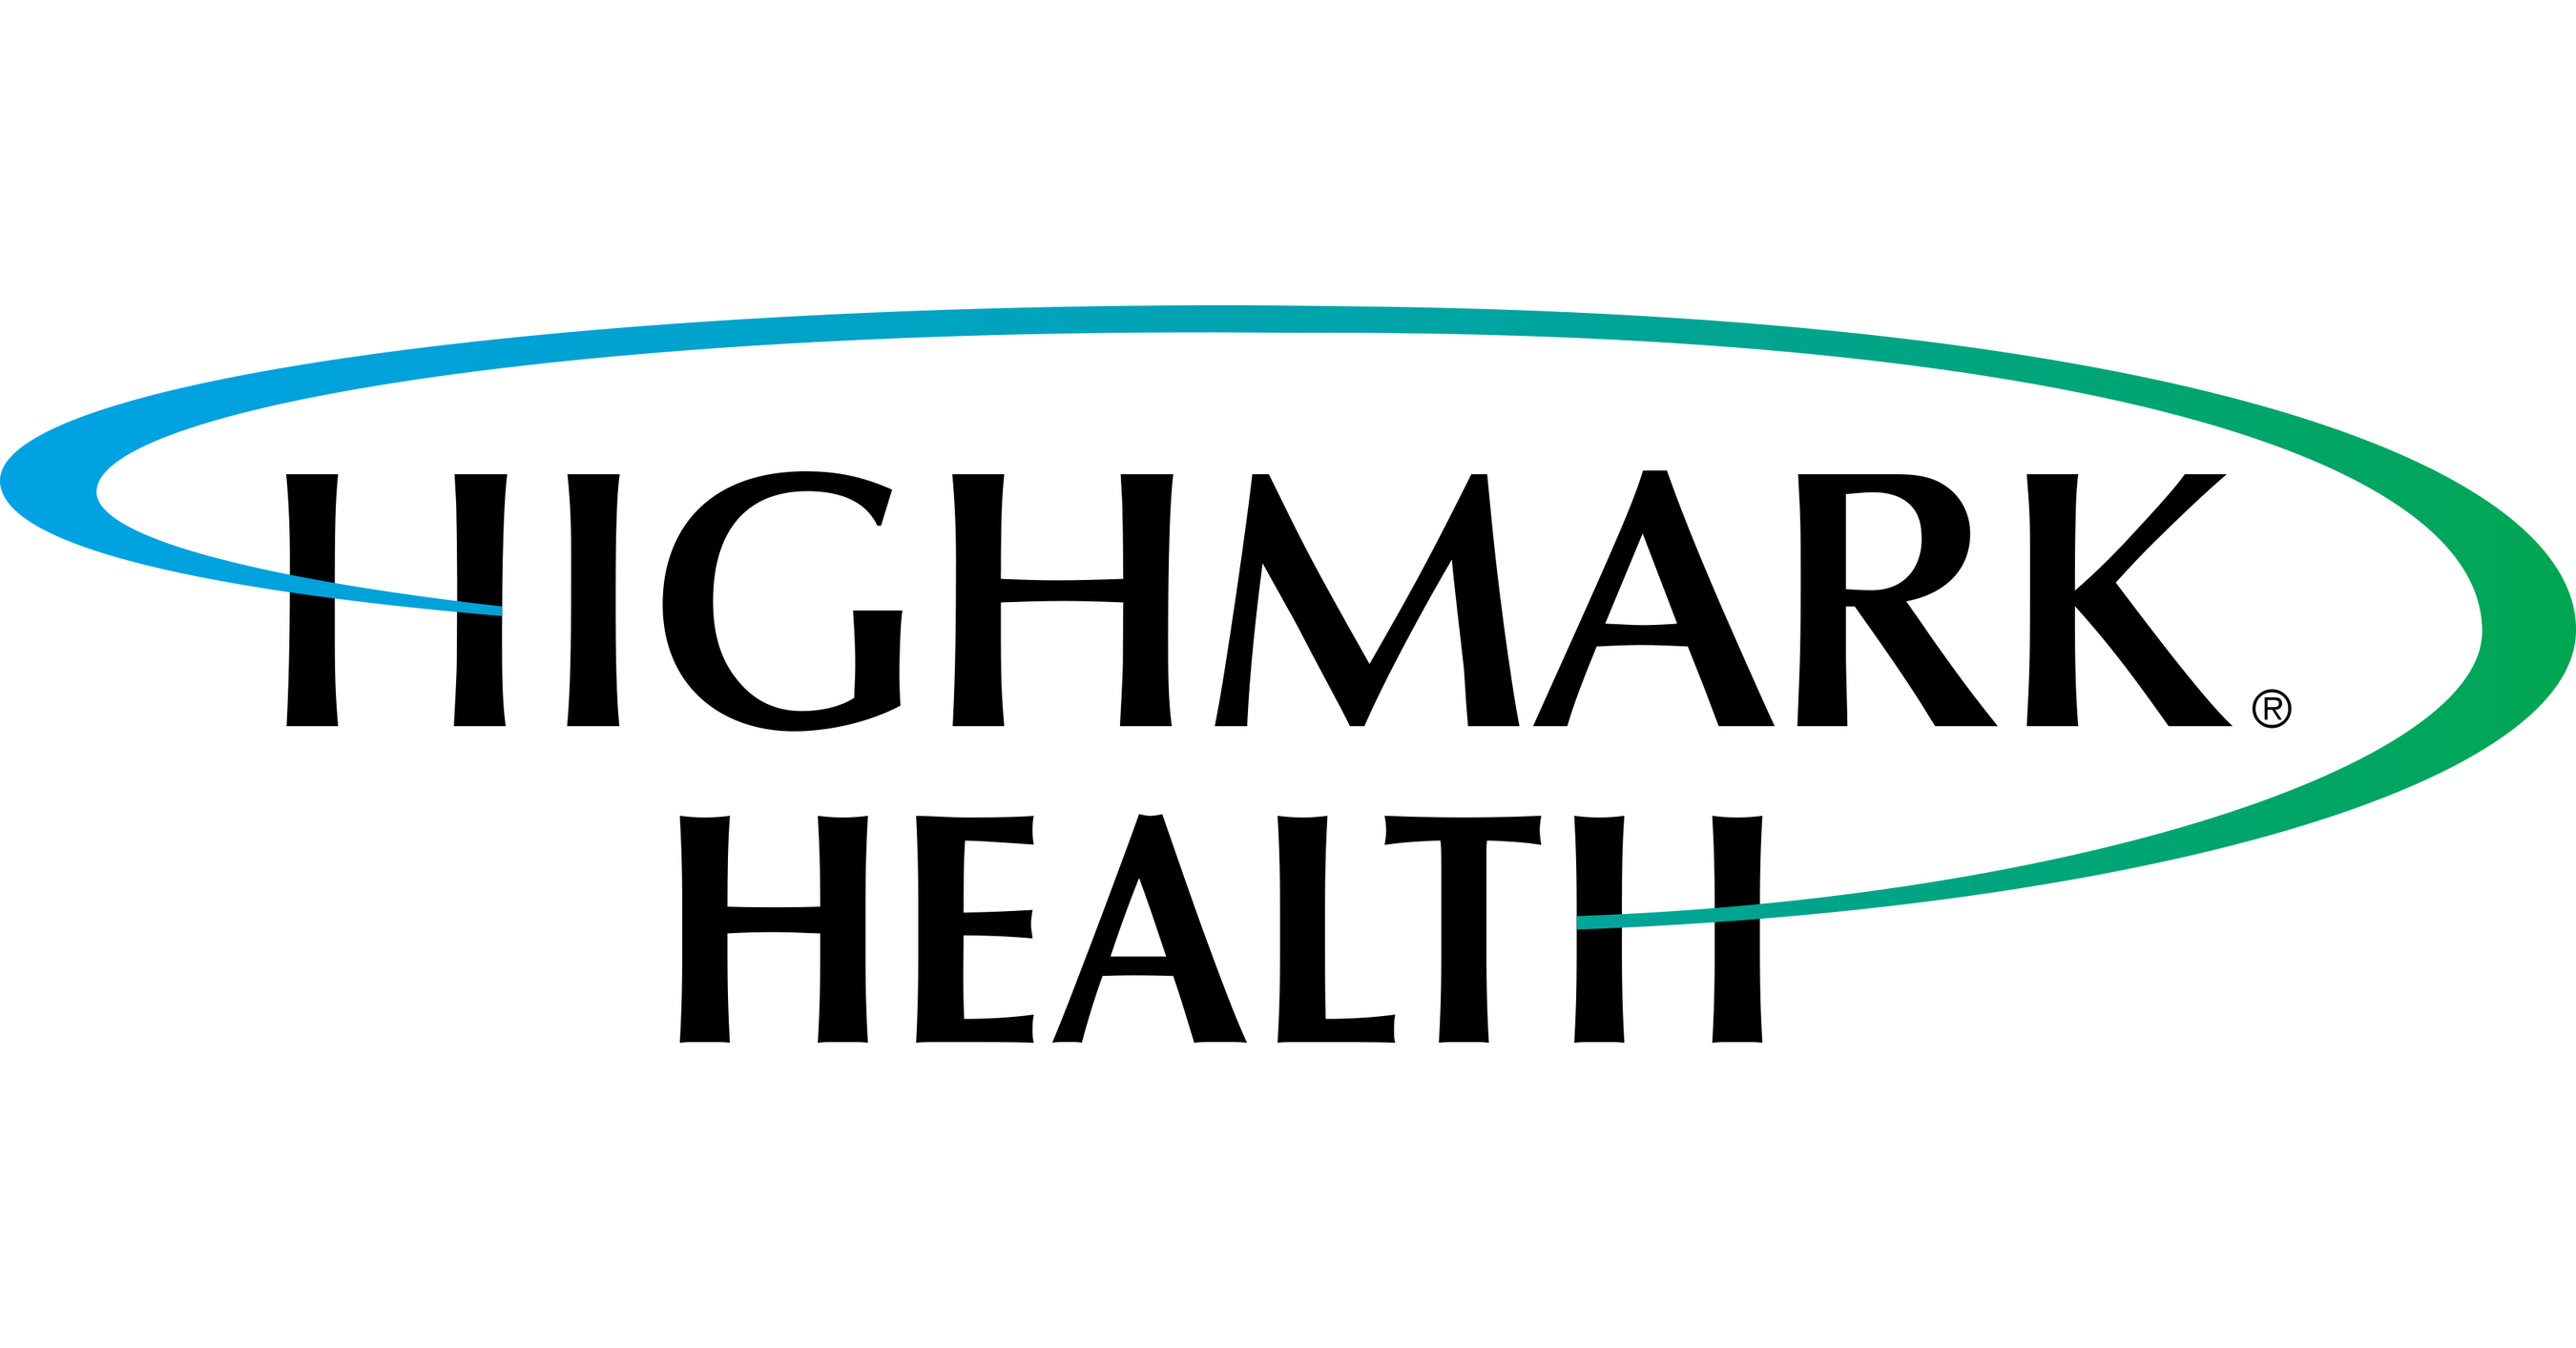 Who owns highmark senior health company juniper network publishers